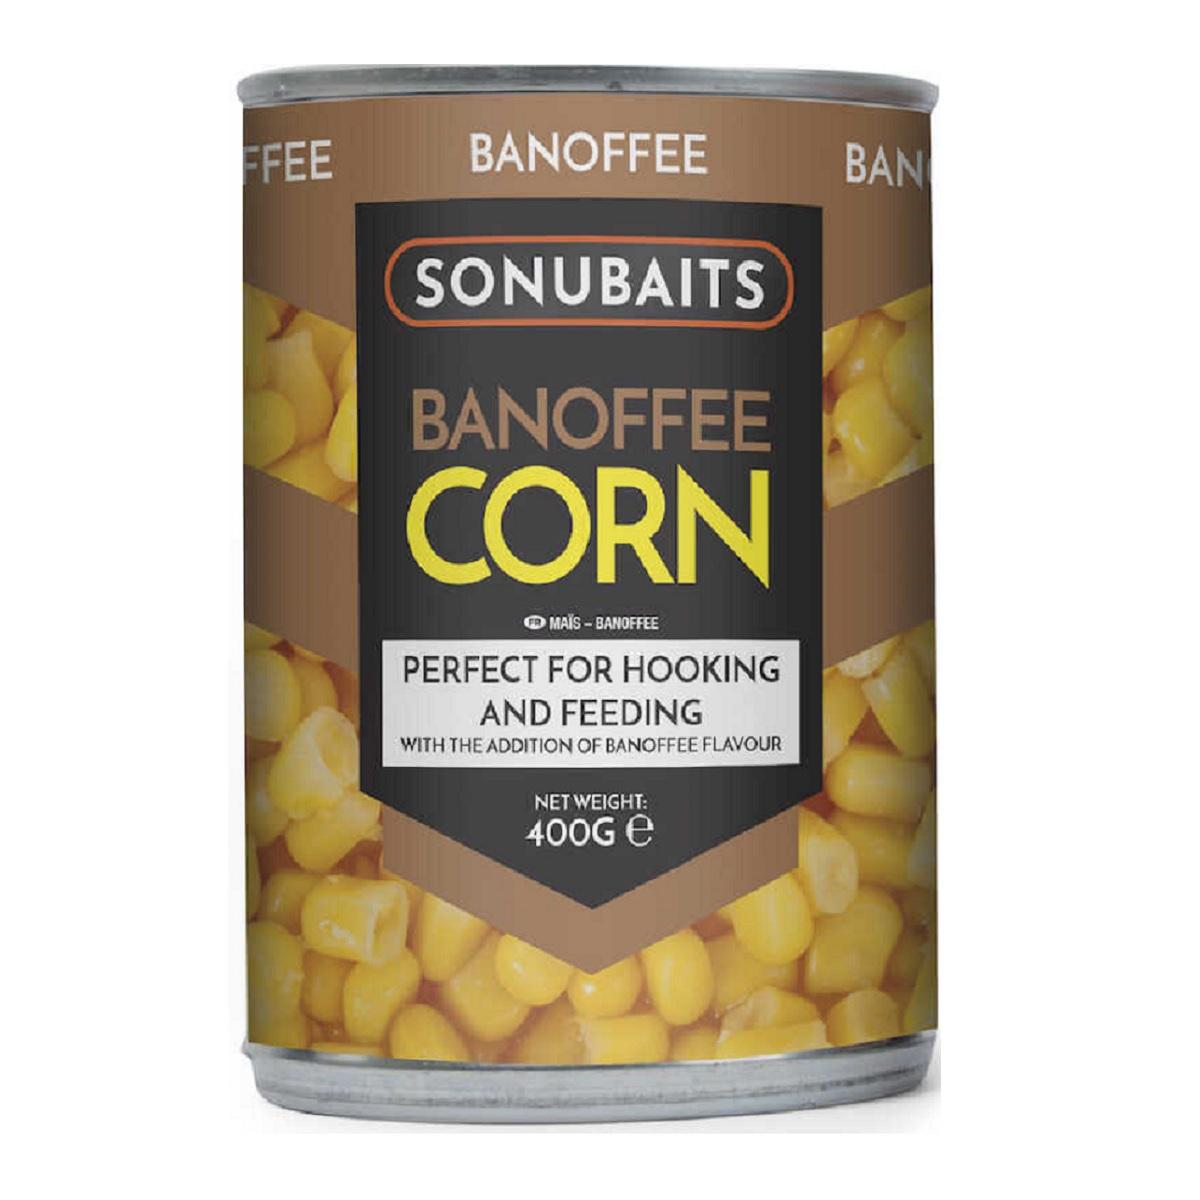 Sonubaits Banoffee corn